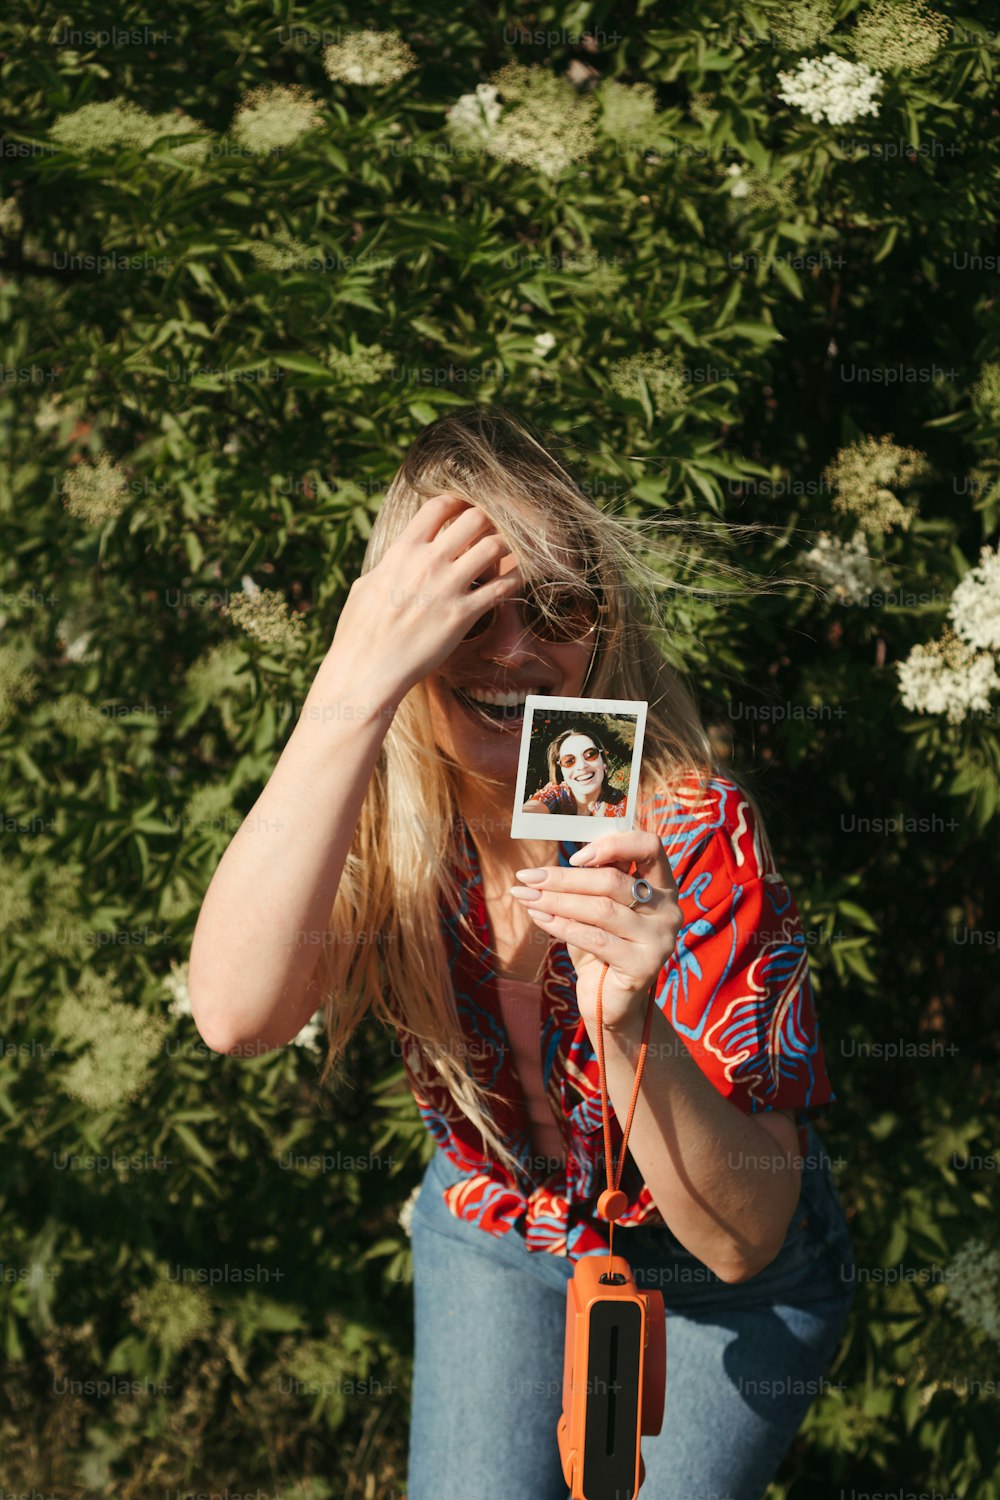 Una mujer sosteniendo una polaroid frente a su cara